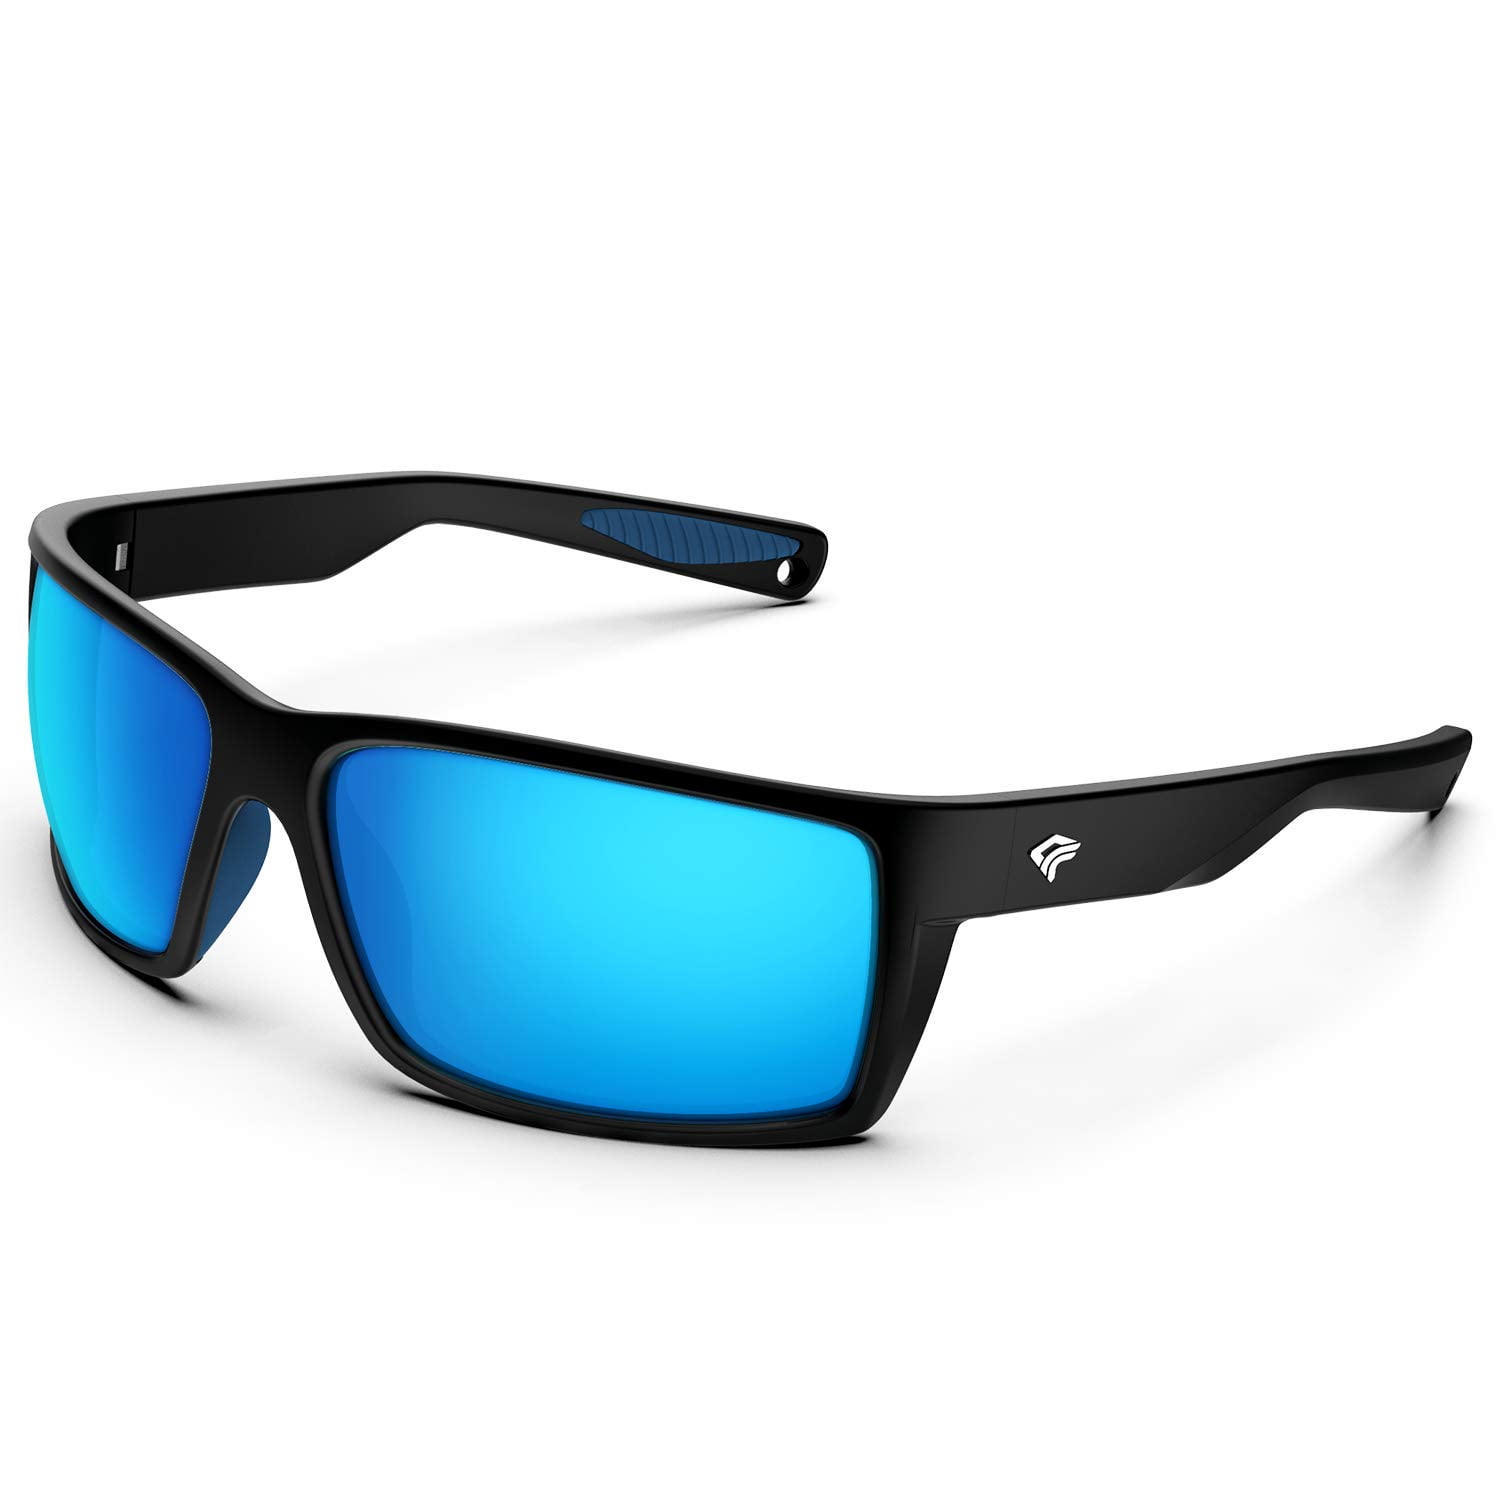 TOREGE Sports Polarized Sunglasses for Men Women,Wrap Around Design Lightweight UV Protection Sunglasses For boating Fishing 